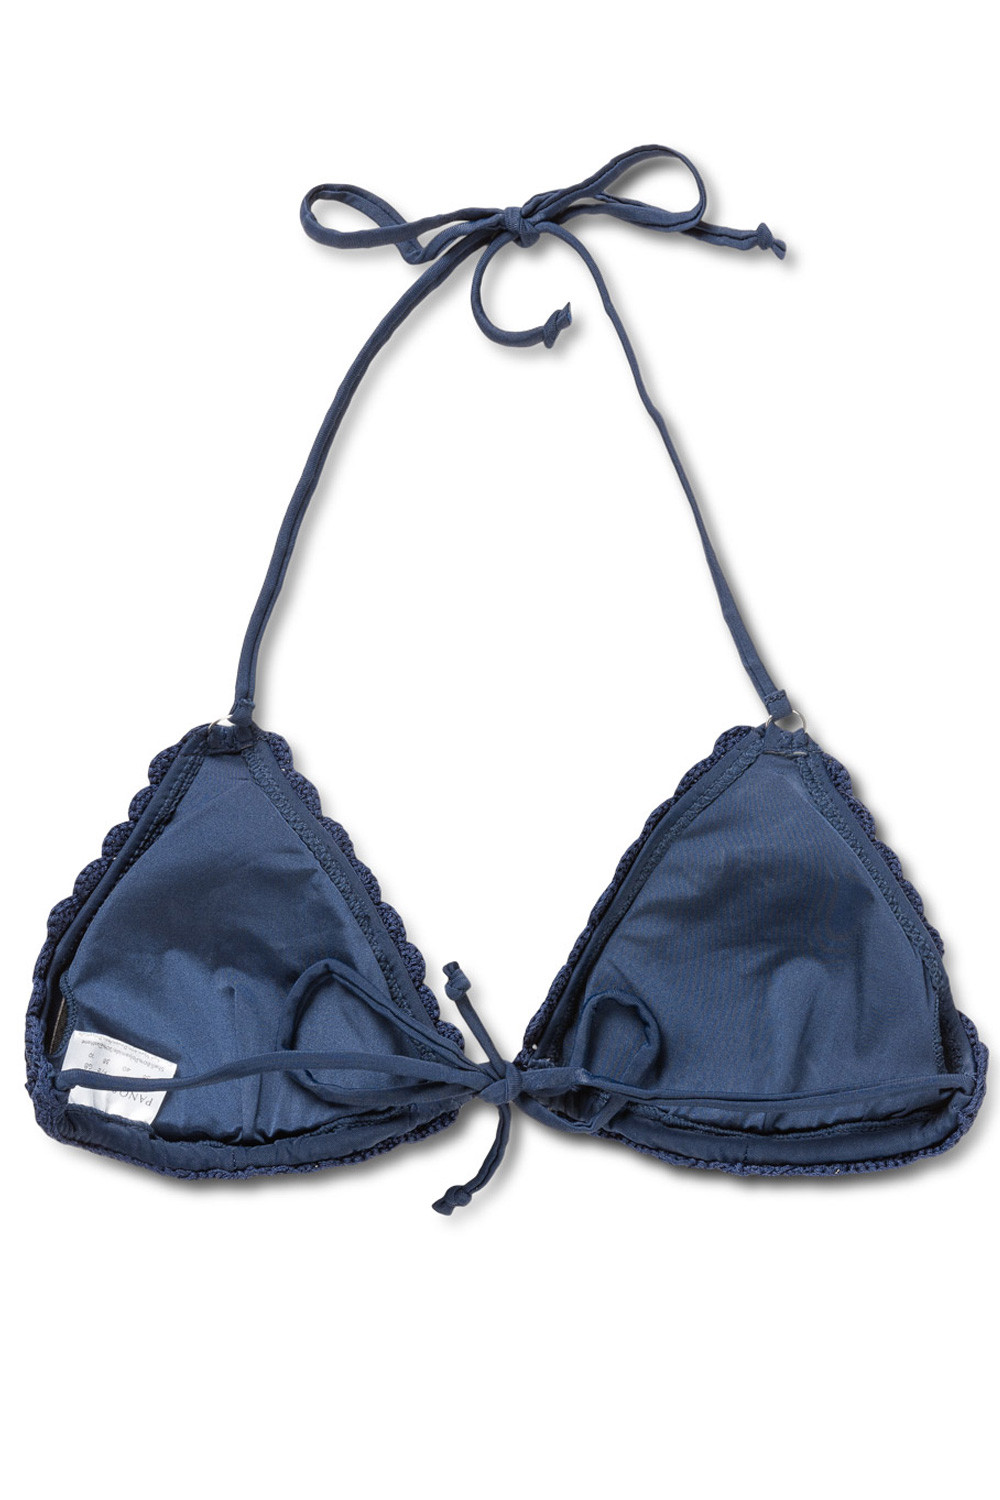 Panos Emporio Kandia Crochet Bikini Top Navy Blauw